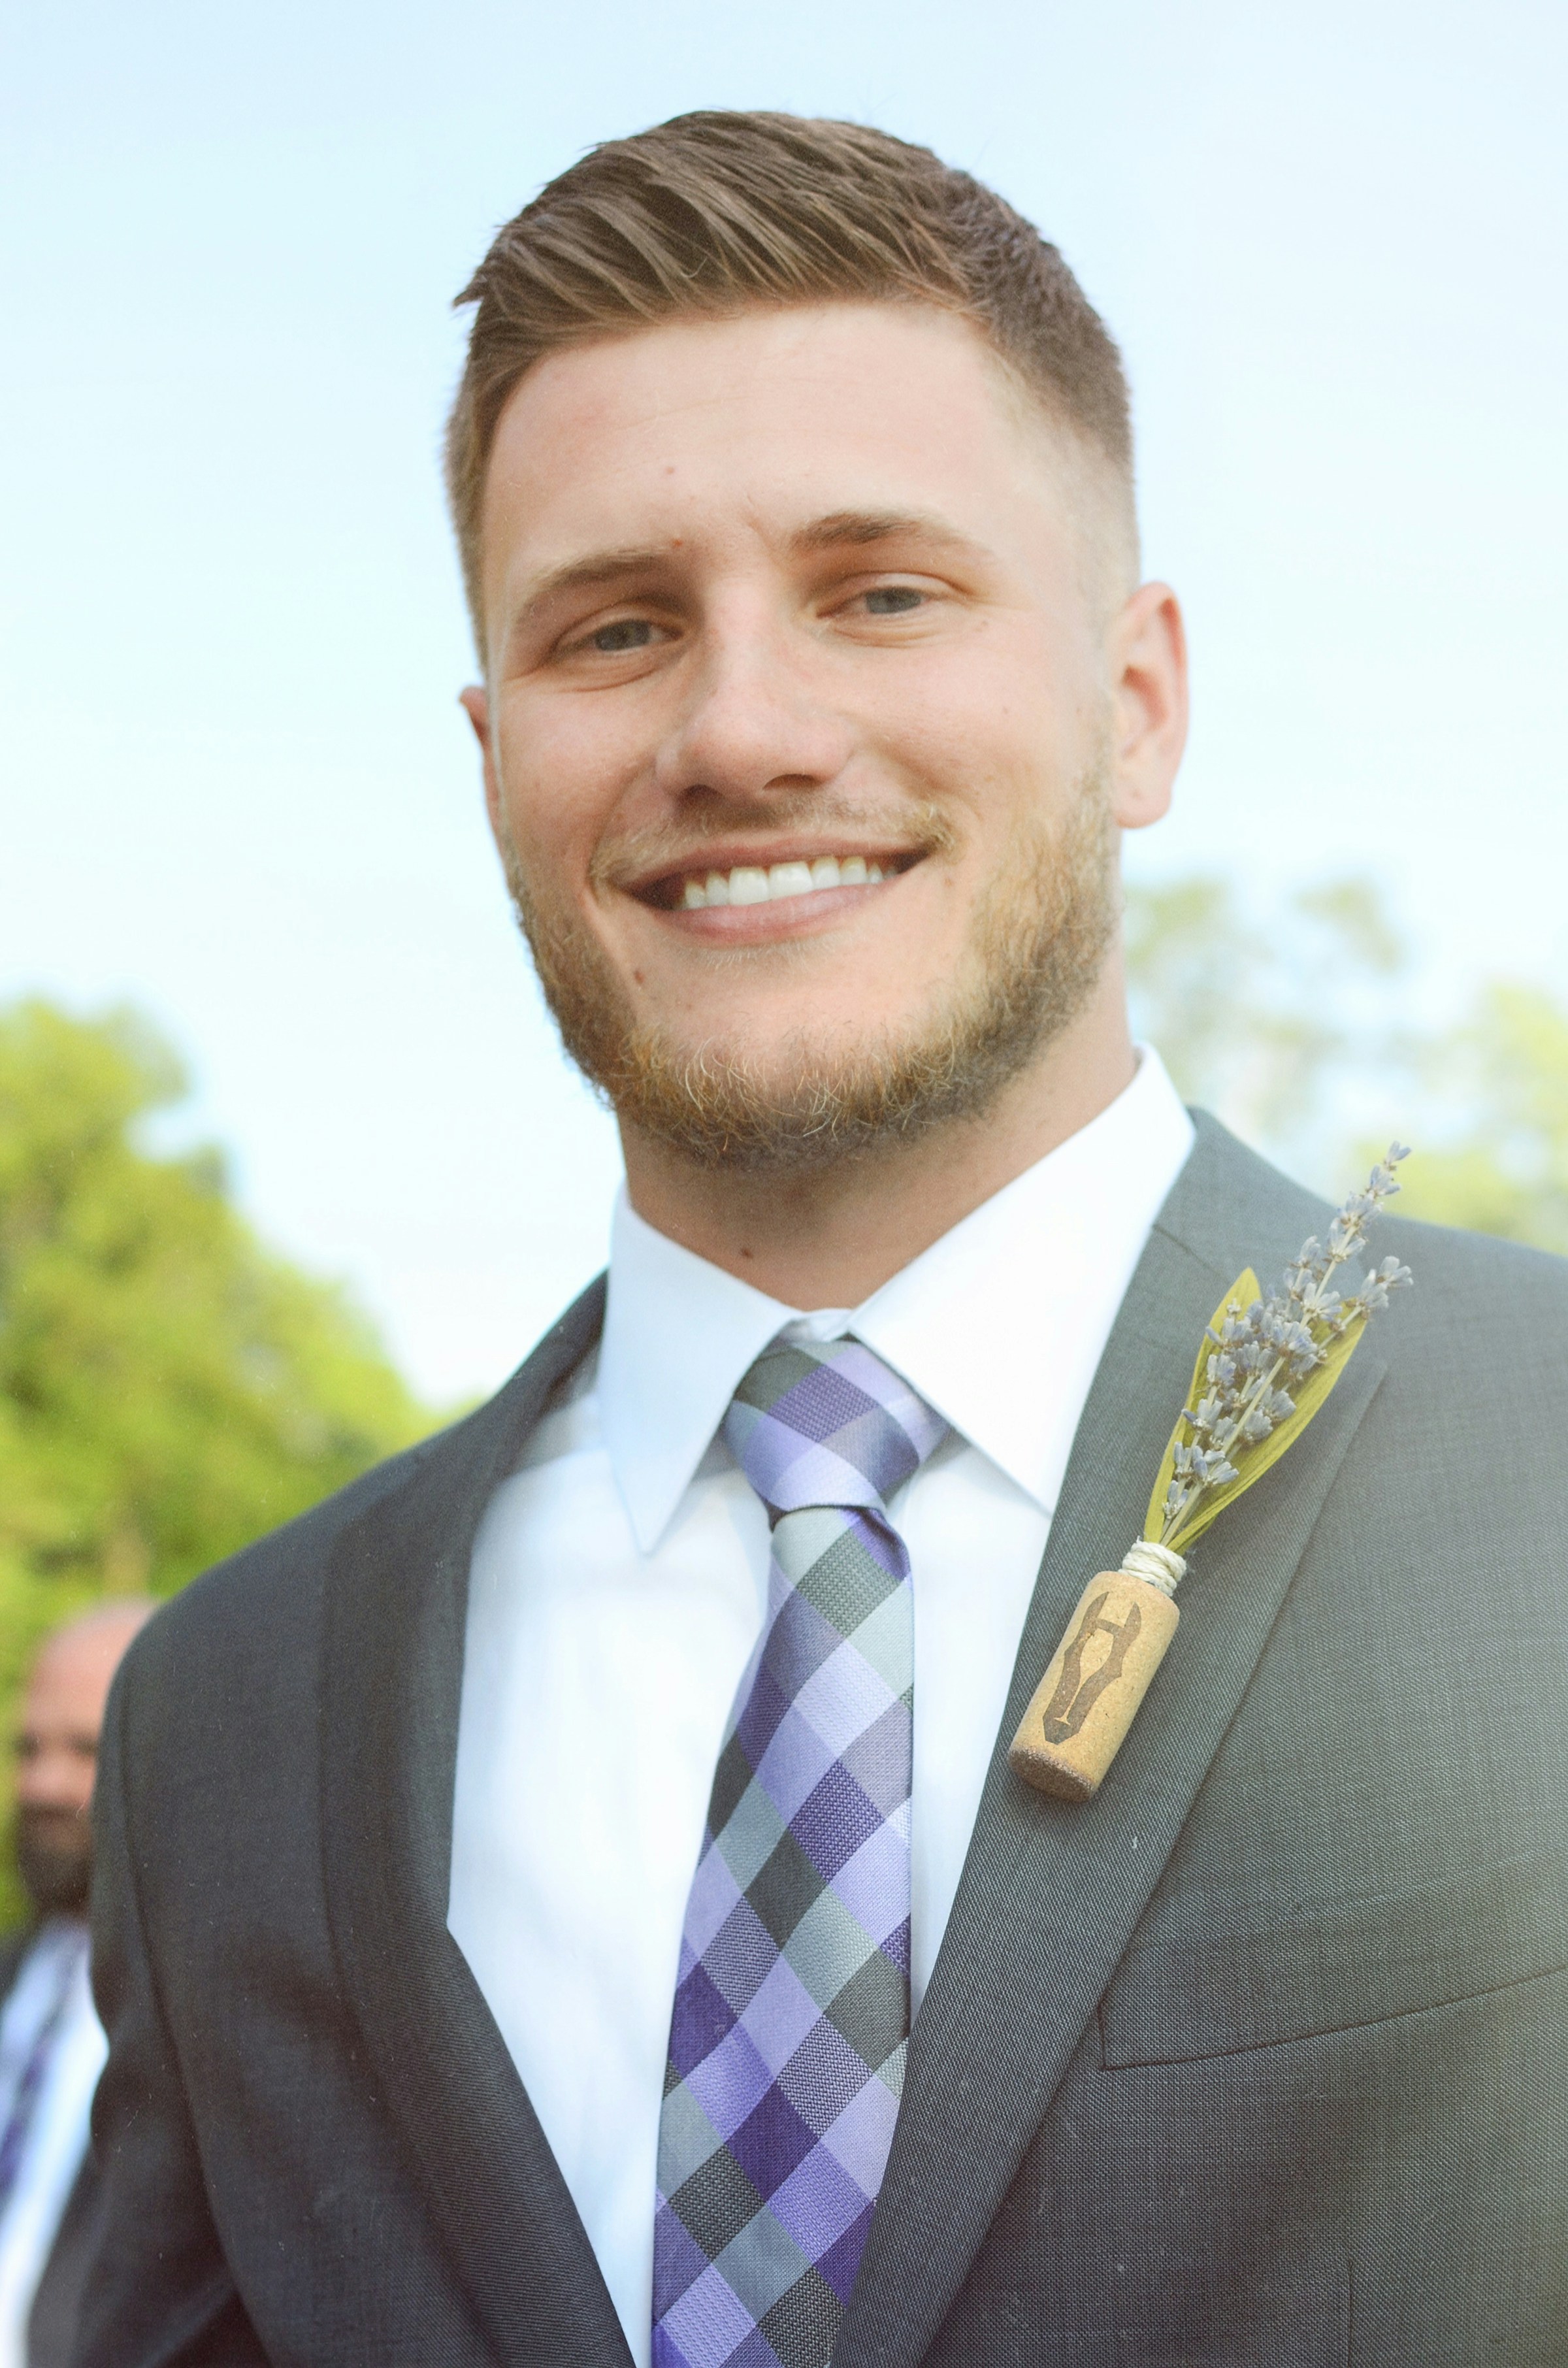 A smiling groom | Source: Pexels